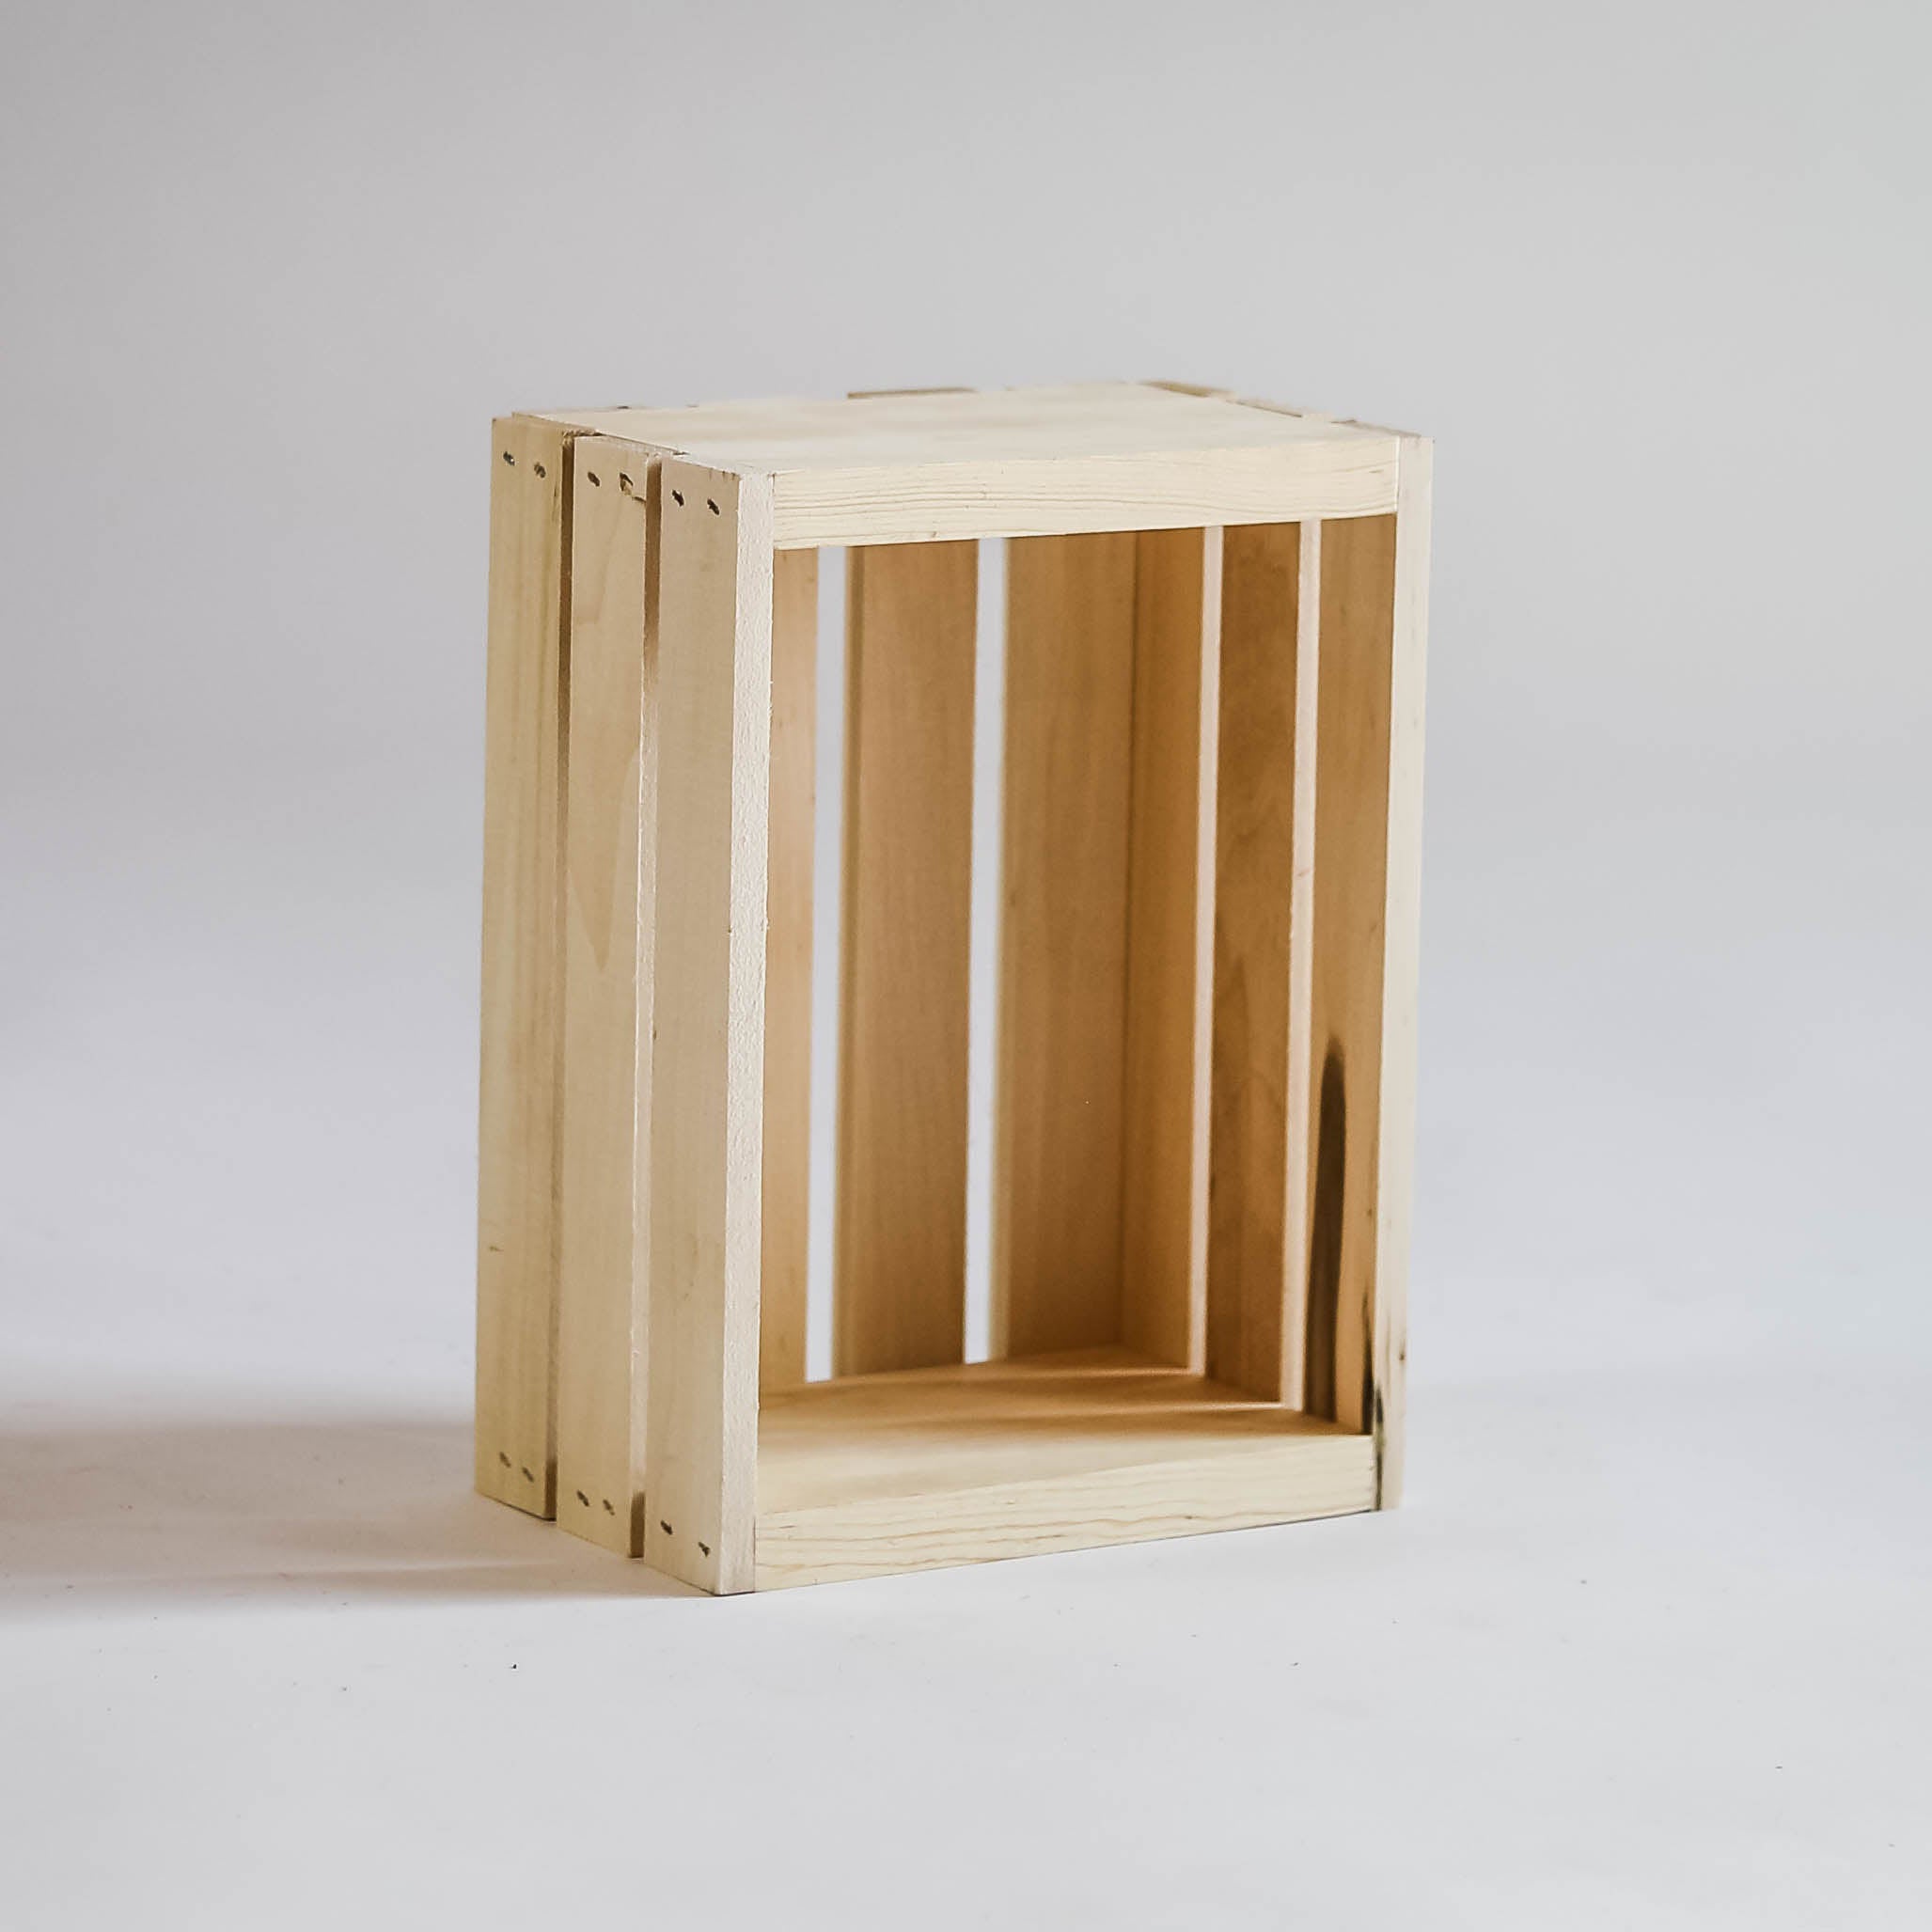 Small Wooden Crates - North Rustic Design